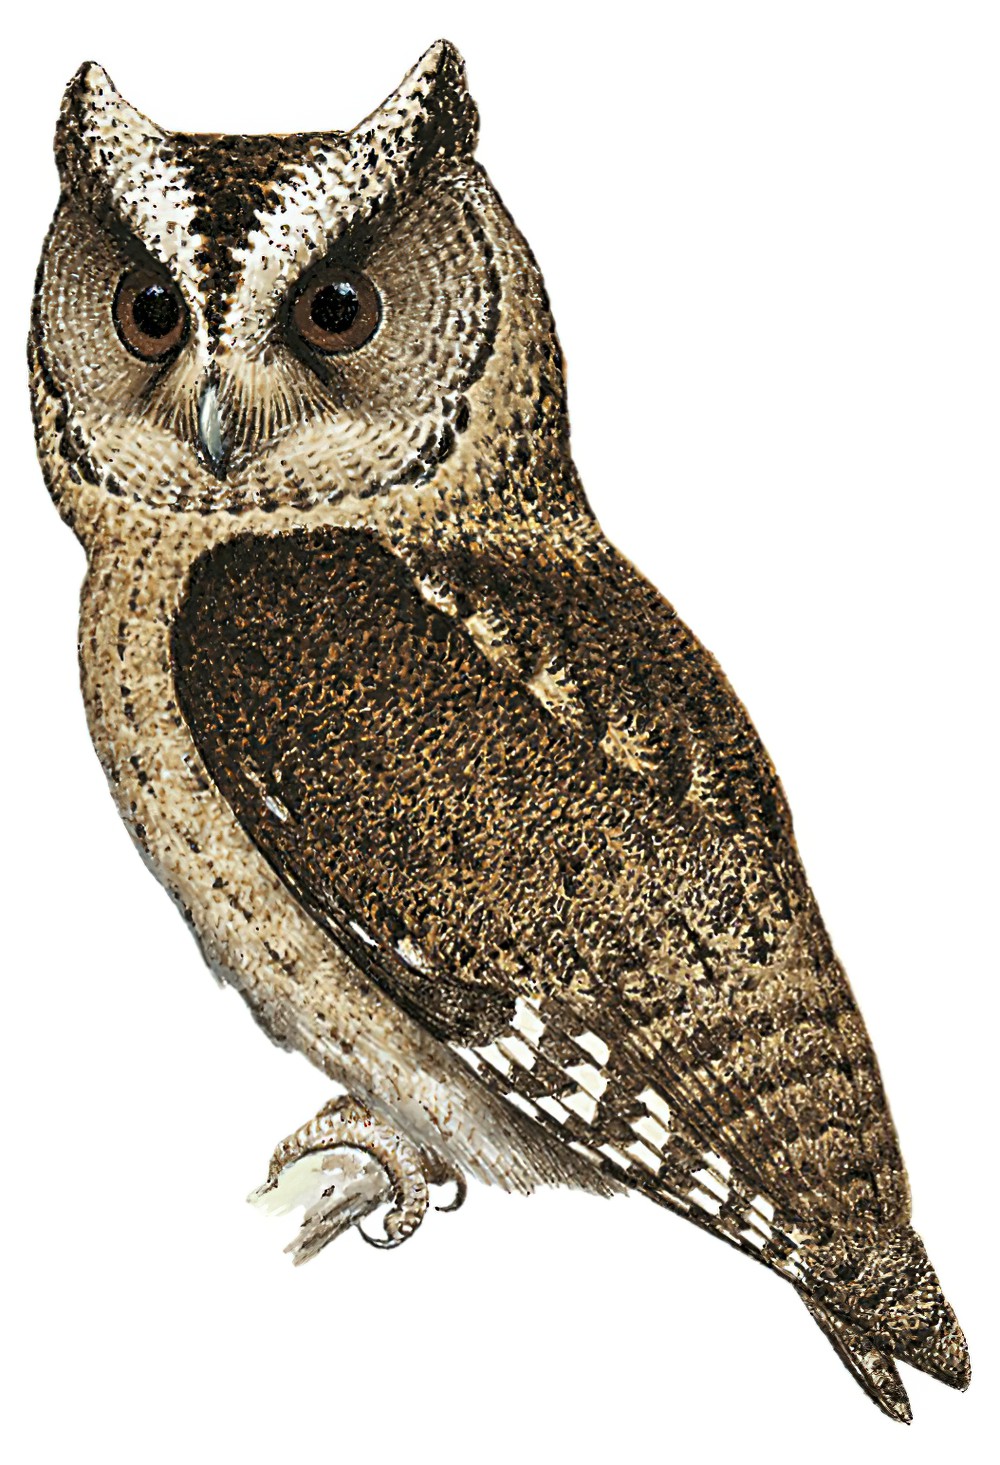 Sunda Scops-Owl / Otus lempiji